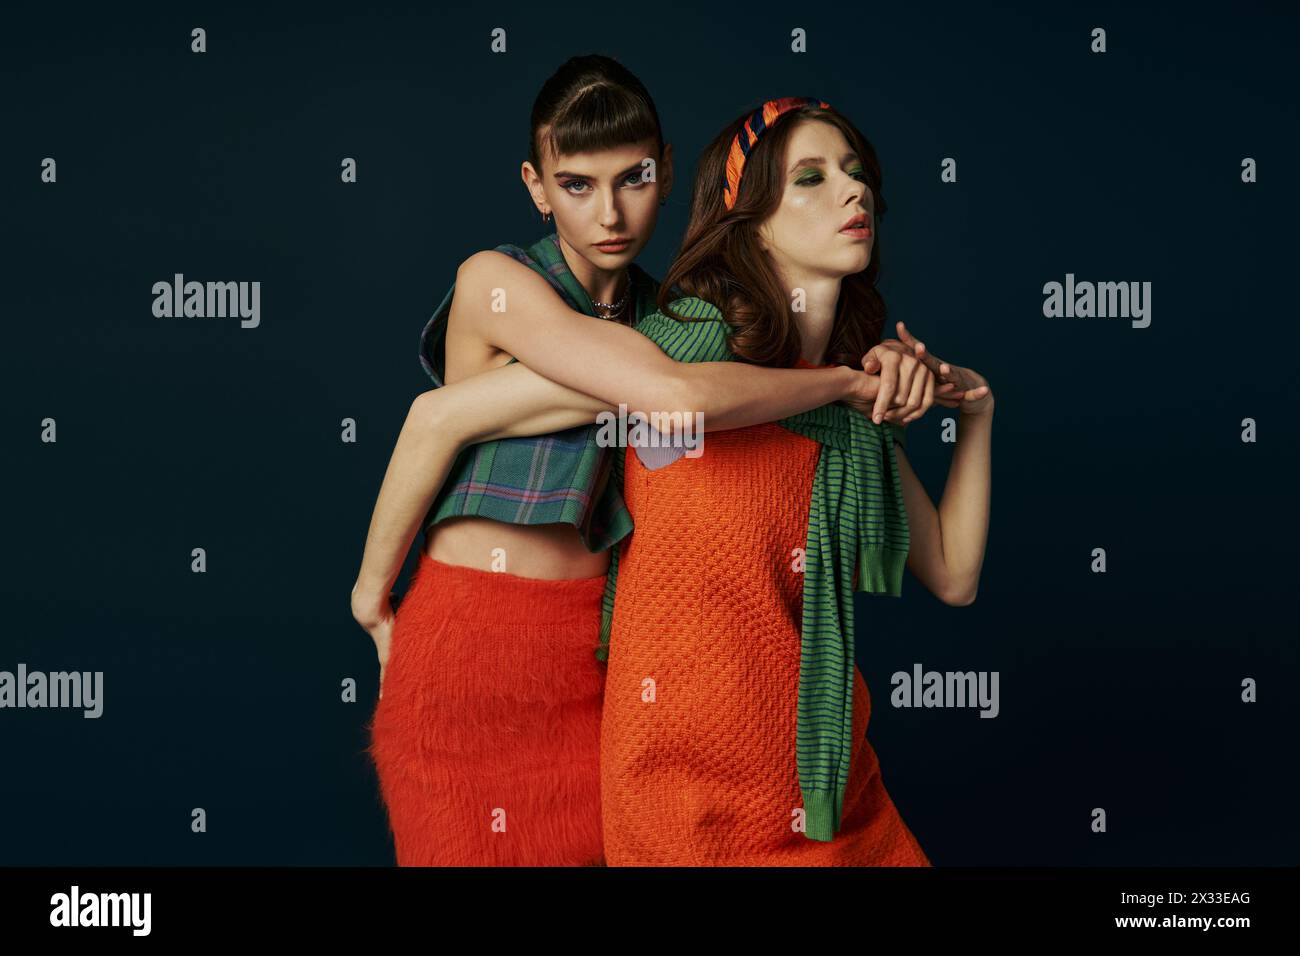 Two women in orange skirts hugging affectionately. Stock Photo